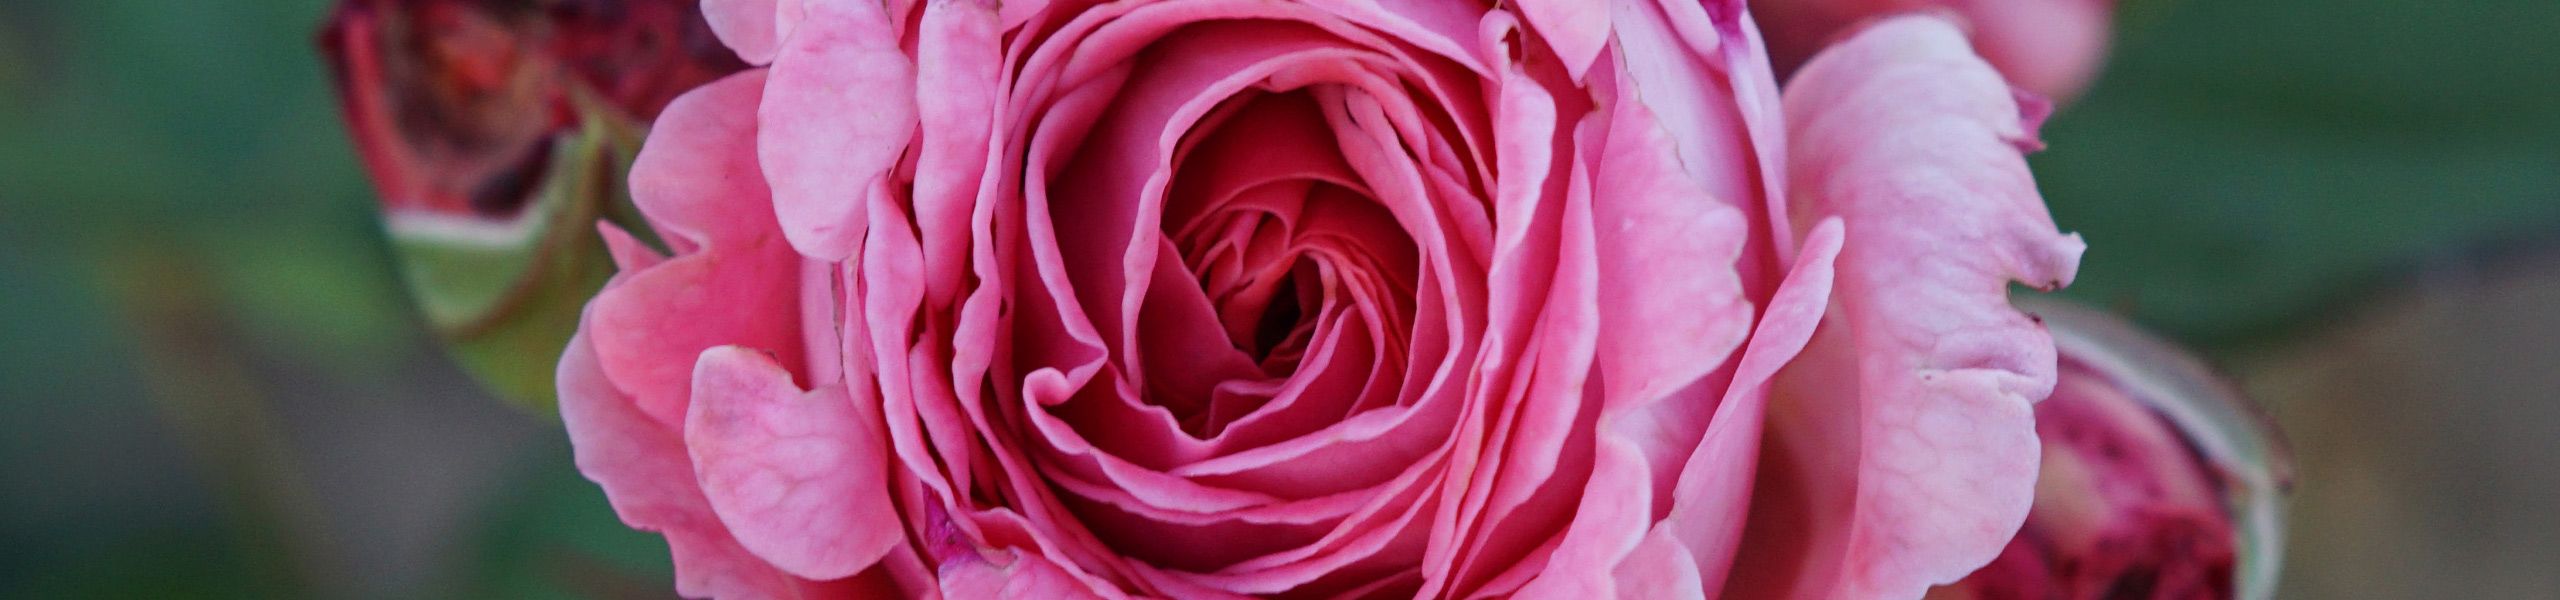 Pinke Rose bei Weinsberger Rosen